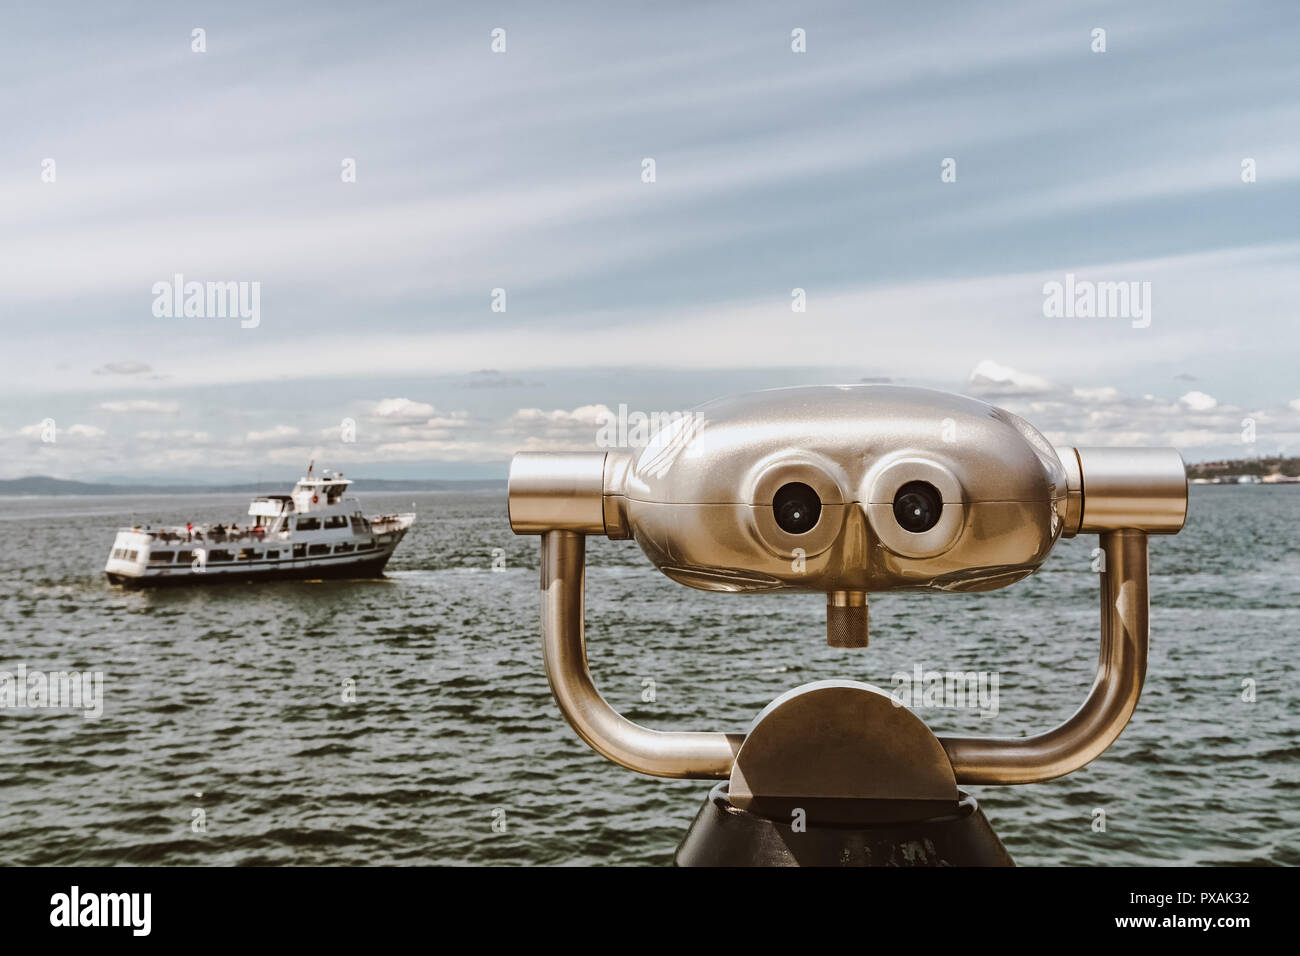 Close-up of a viewing machine or binoculars on the Seattle waterfront along Elliott Bay, Washington state, USA. Stock Photo